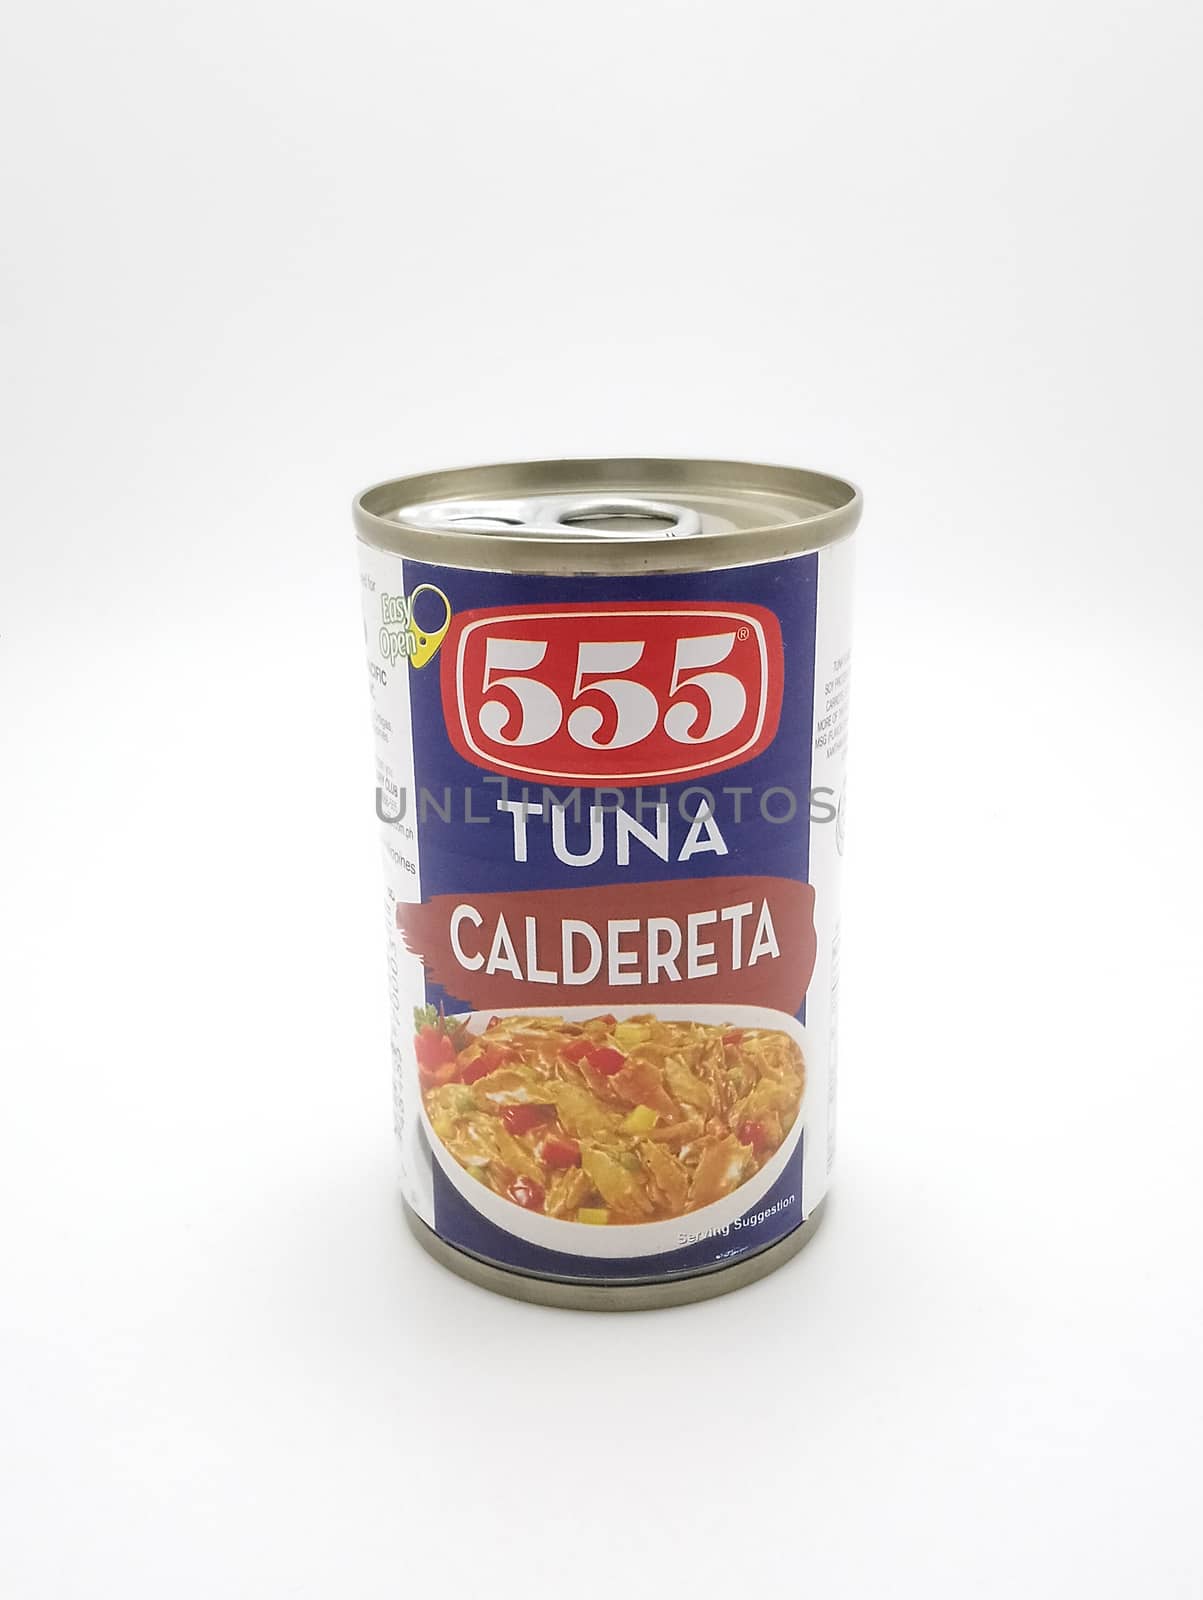 MANILA, PH - SEPT 25 - 555 tuna caldereta can on September 25, 2020 in Manila, Philippines.